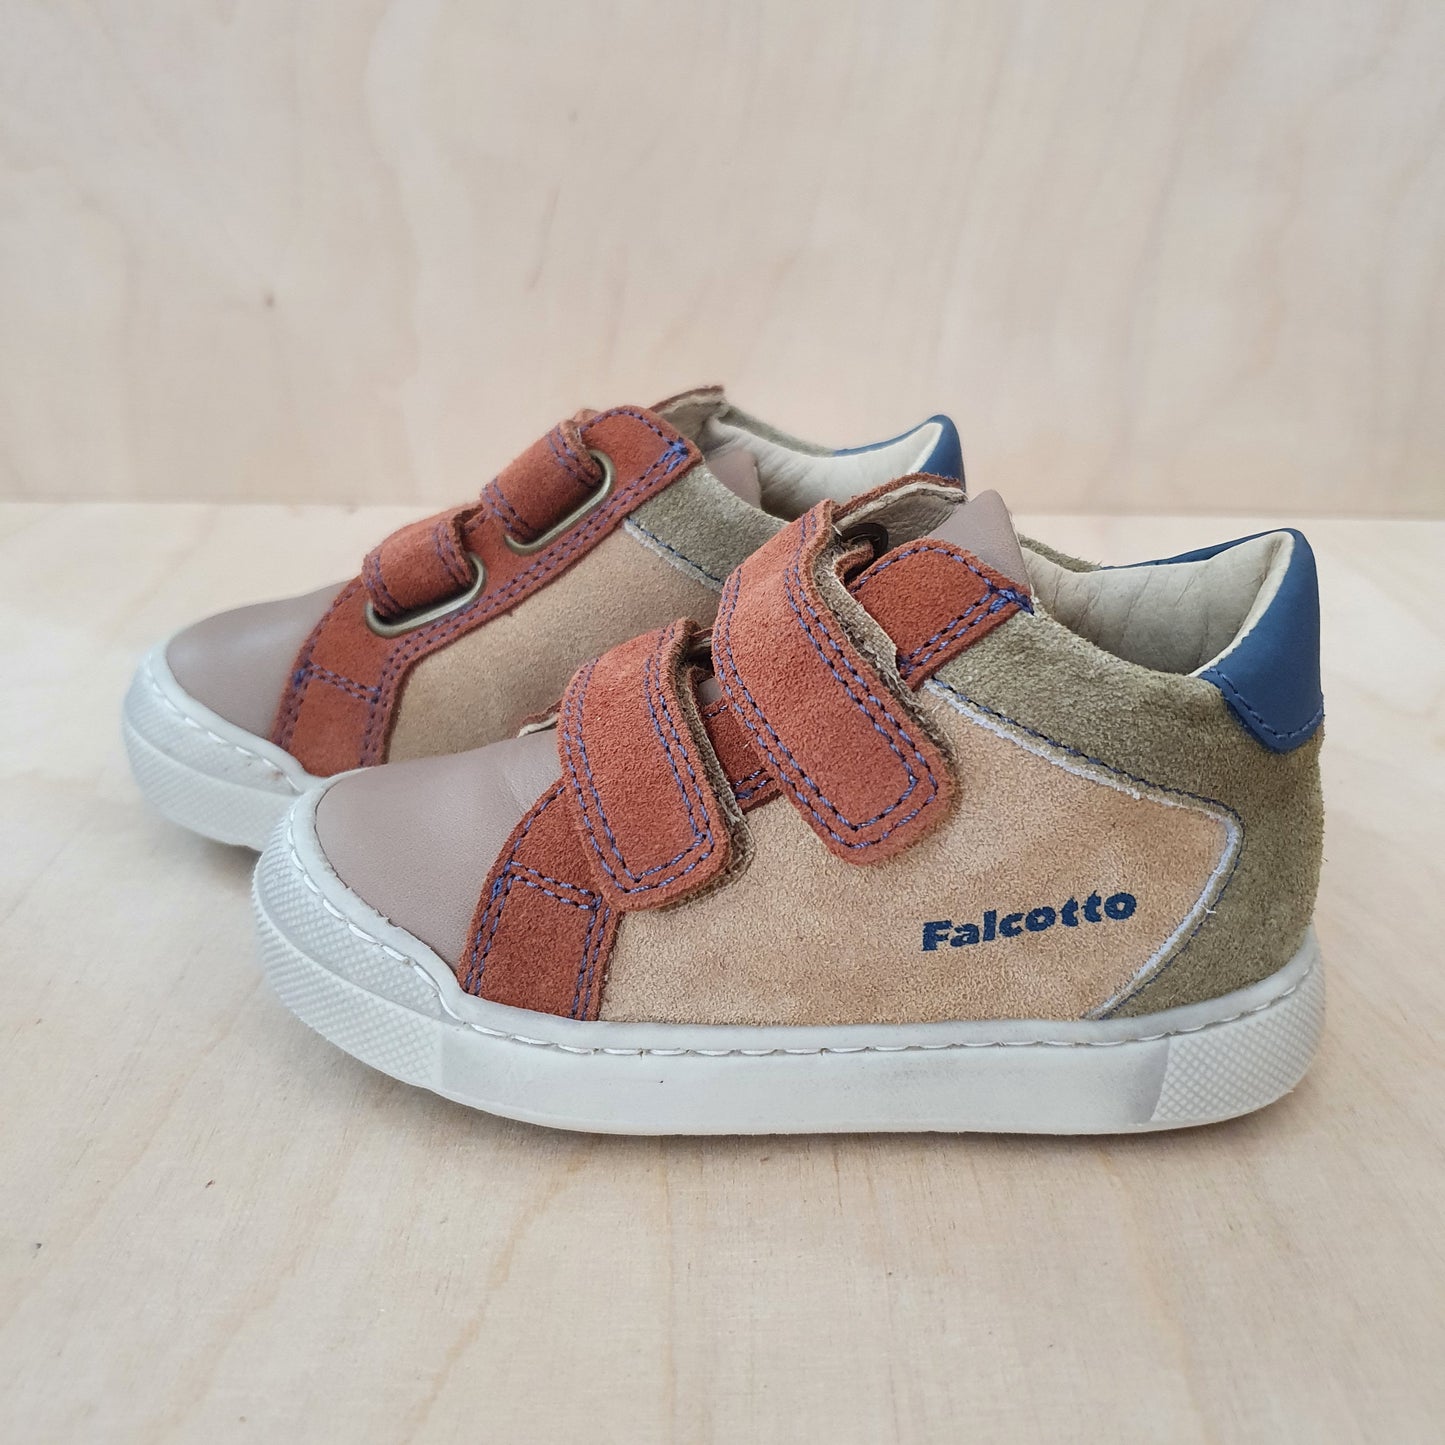 FALCOTTO - stapsneaker patiula - taupe sand, rood/blauw